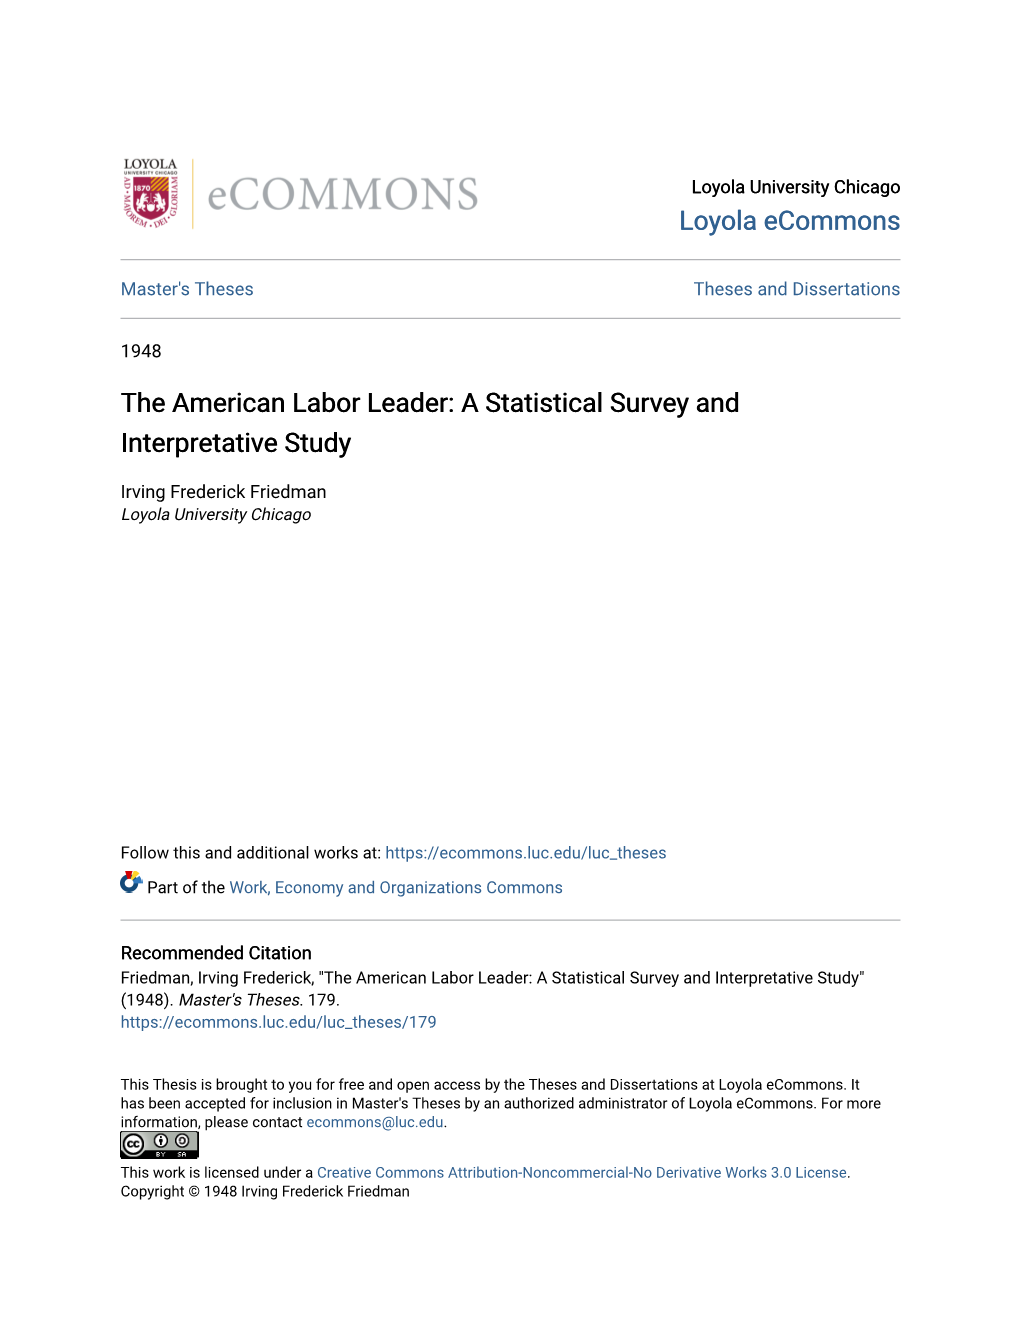 The American Labor Leader: a Statistical Survey and Interpretative Study